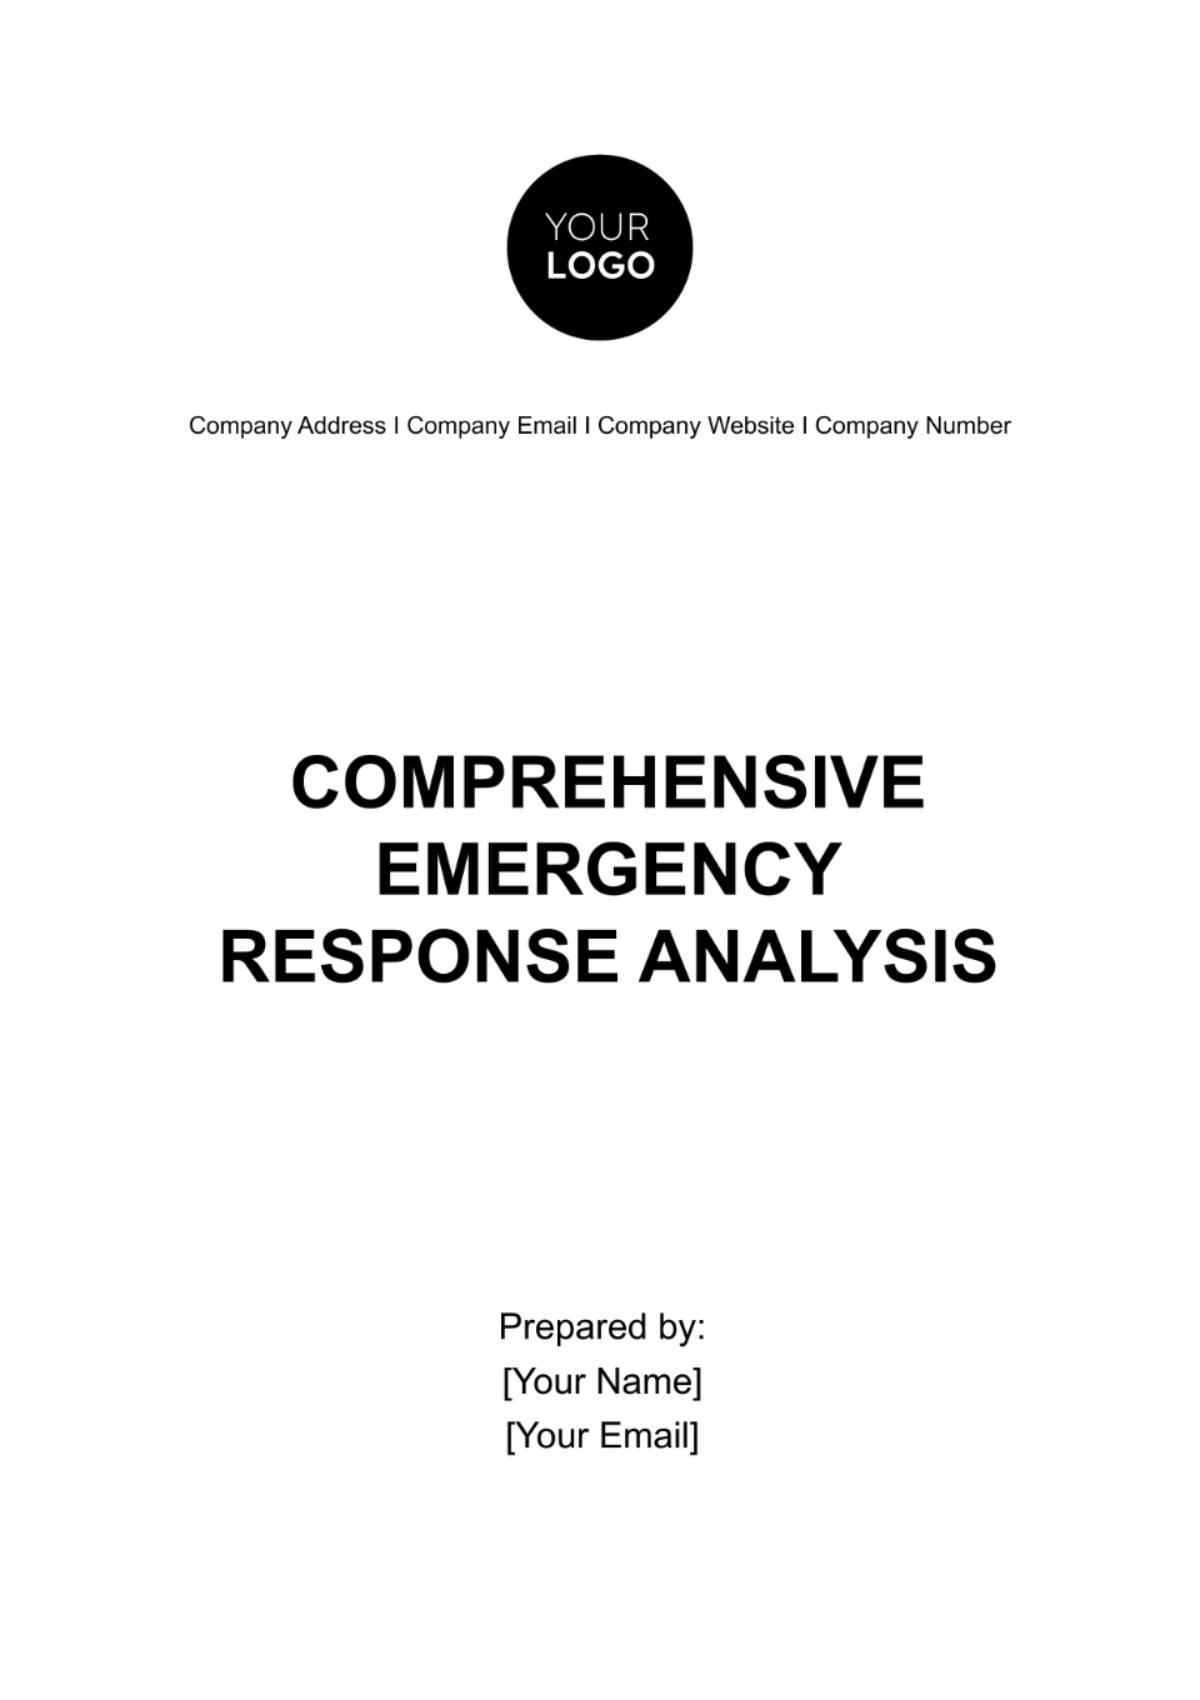 Comprehensive Emergency Response Analysis Template